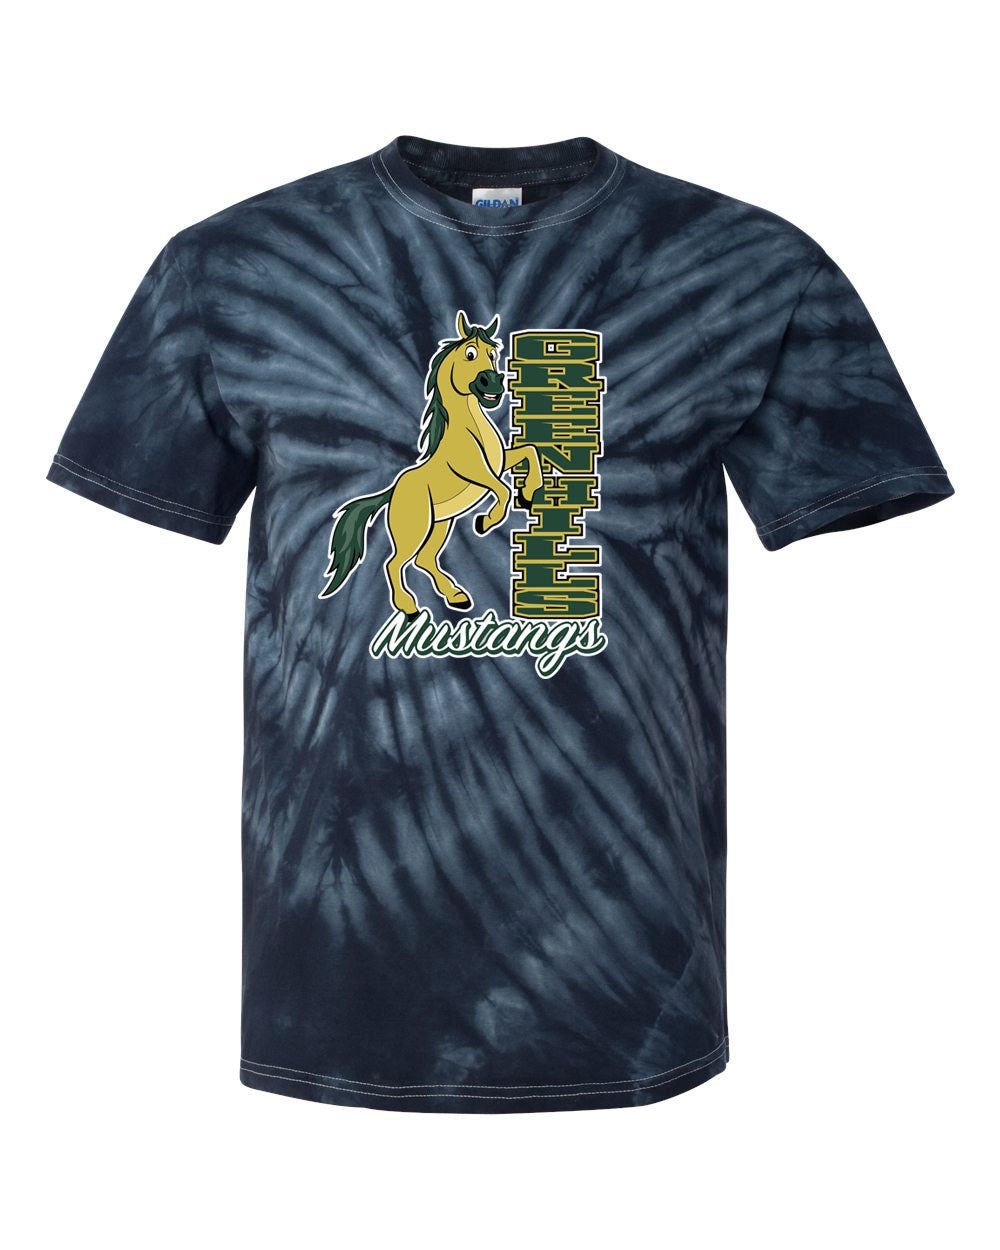 Green Hills Tie Dye t-shirt Design 15